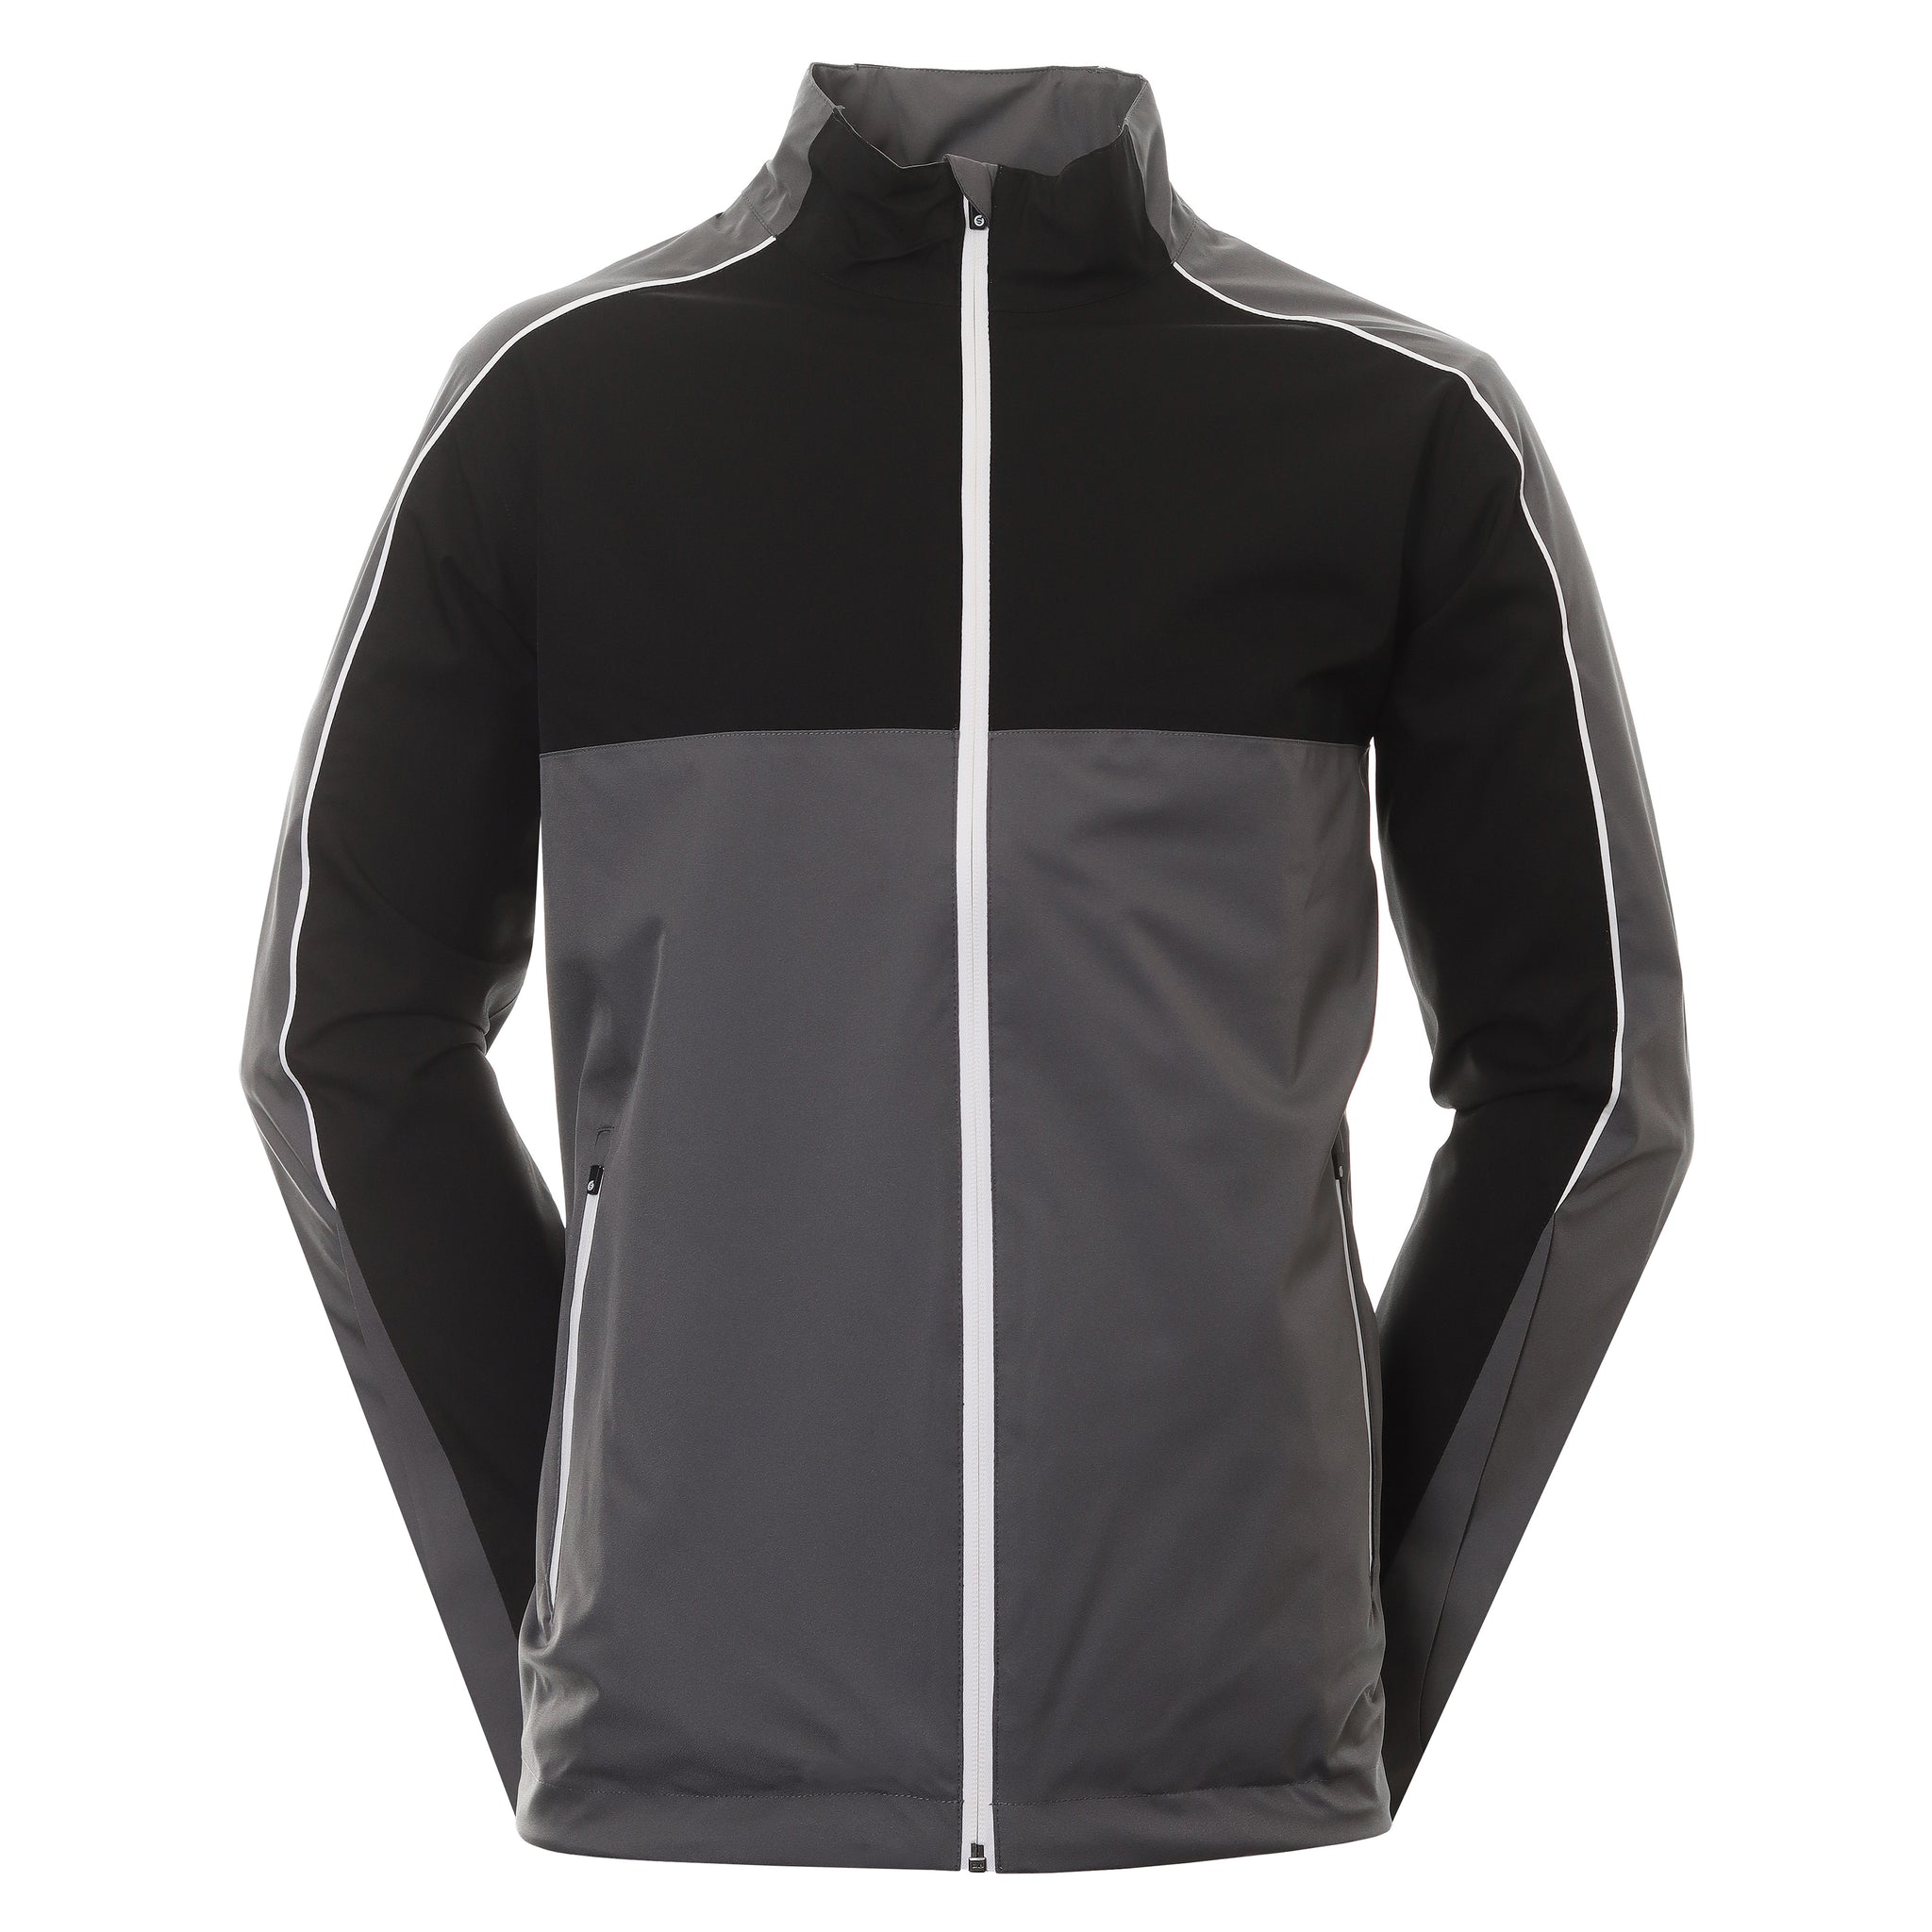 sunderland-golf-matterhorn-waterproof-jacket-sunmr91-mat-gunmetal-black-white